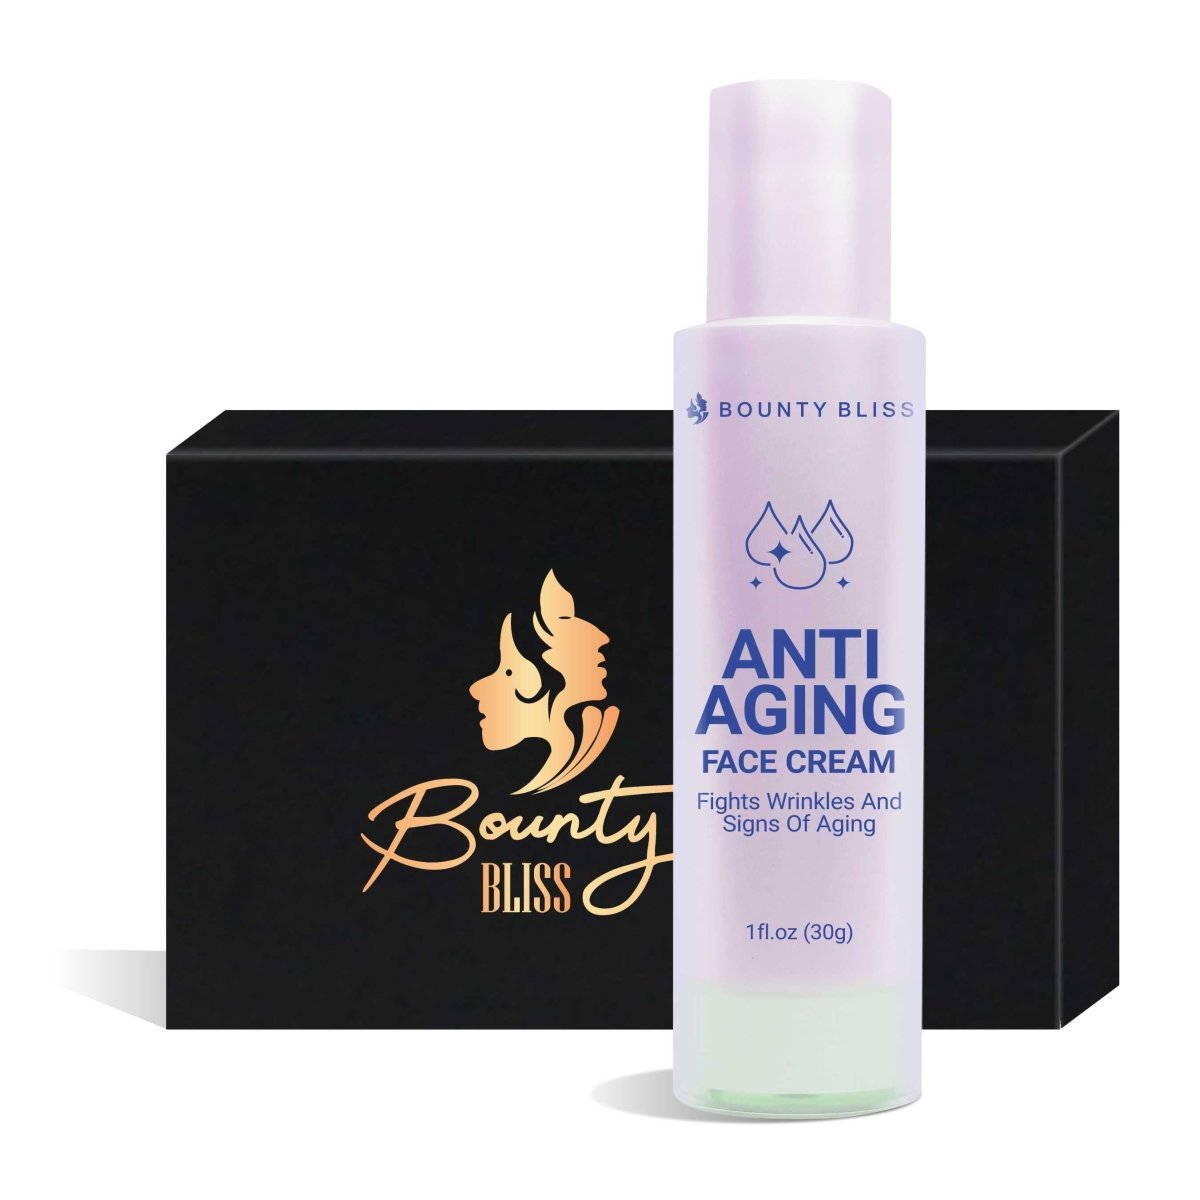 Bounty Bliss Anti Aging Face Cream-30g - Kreate- Face